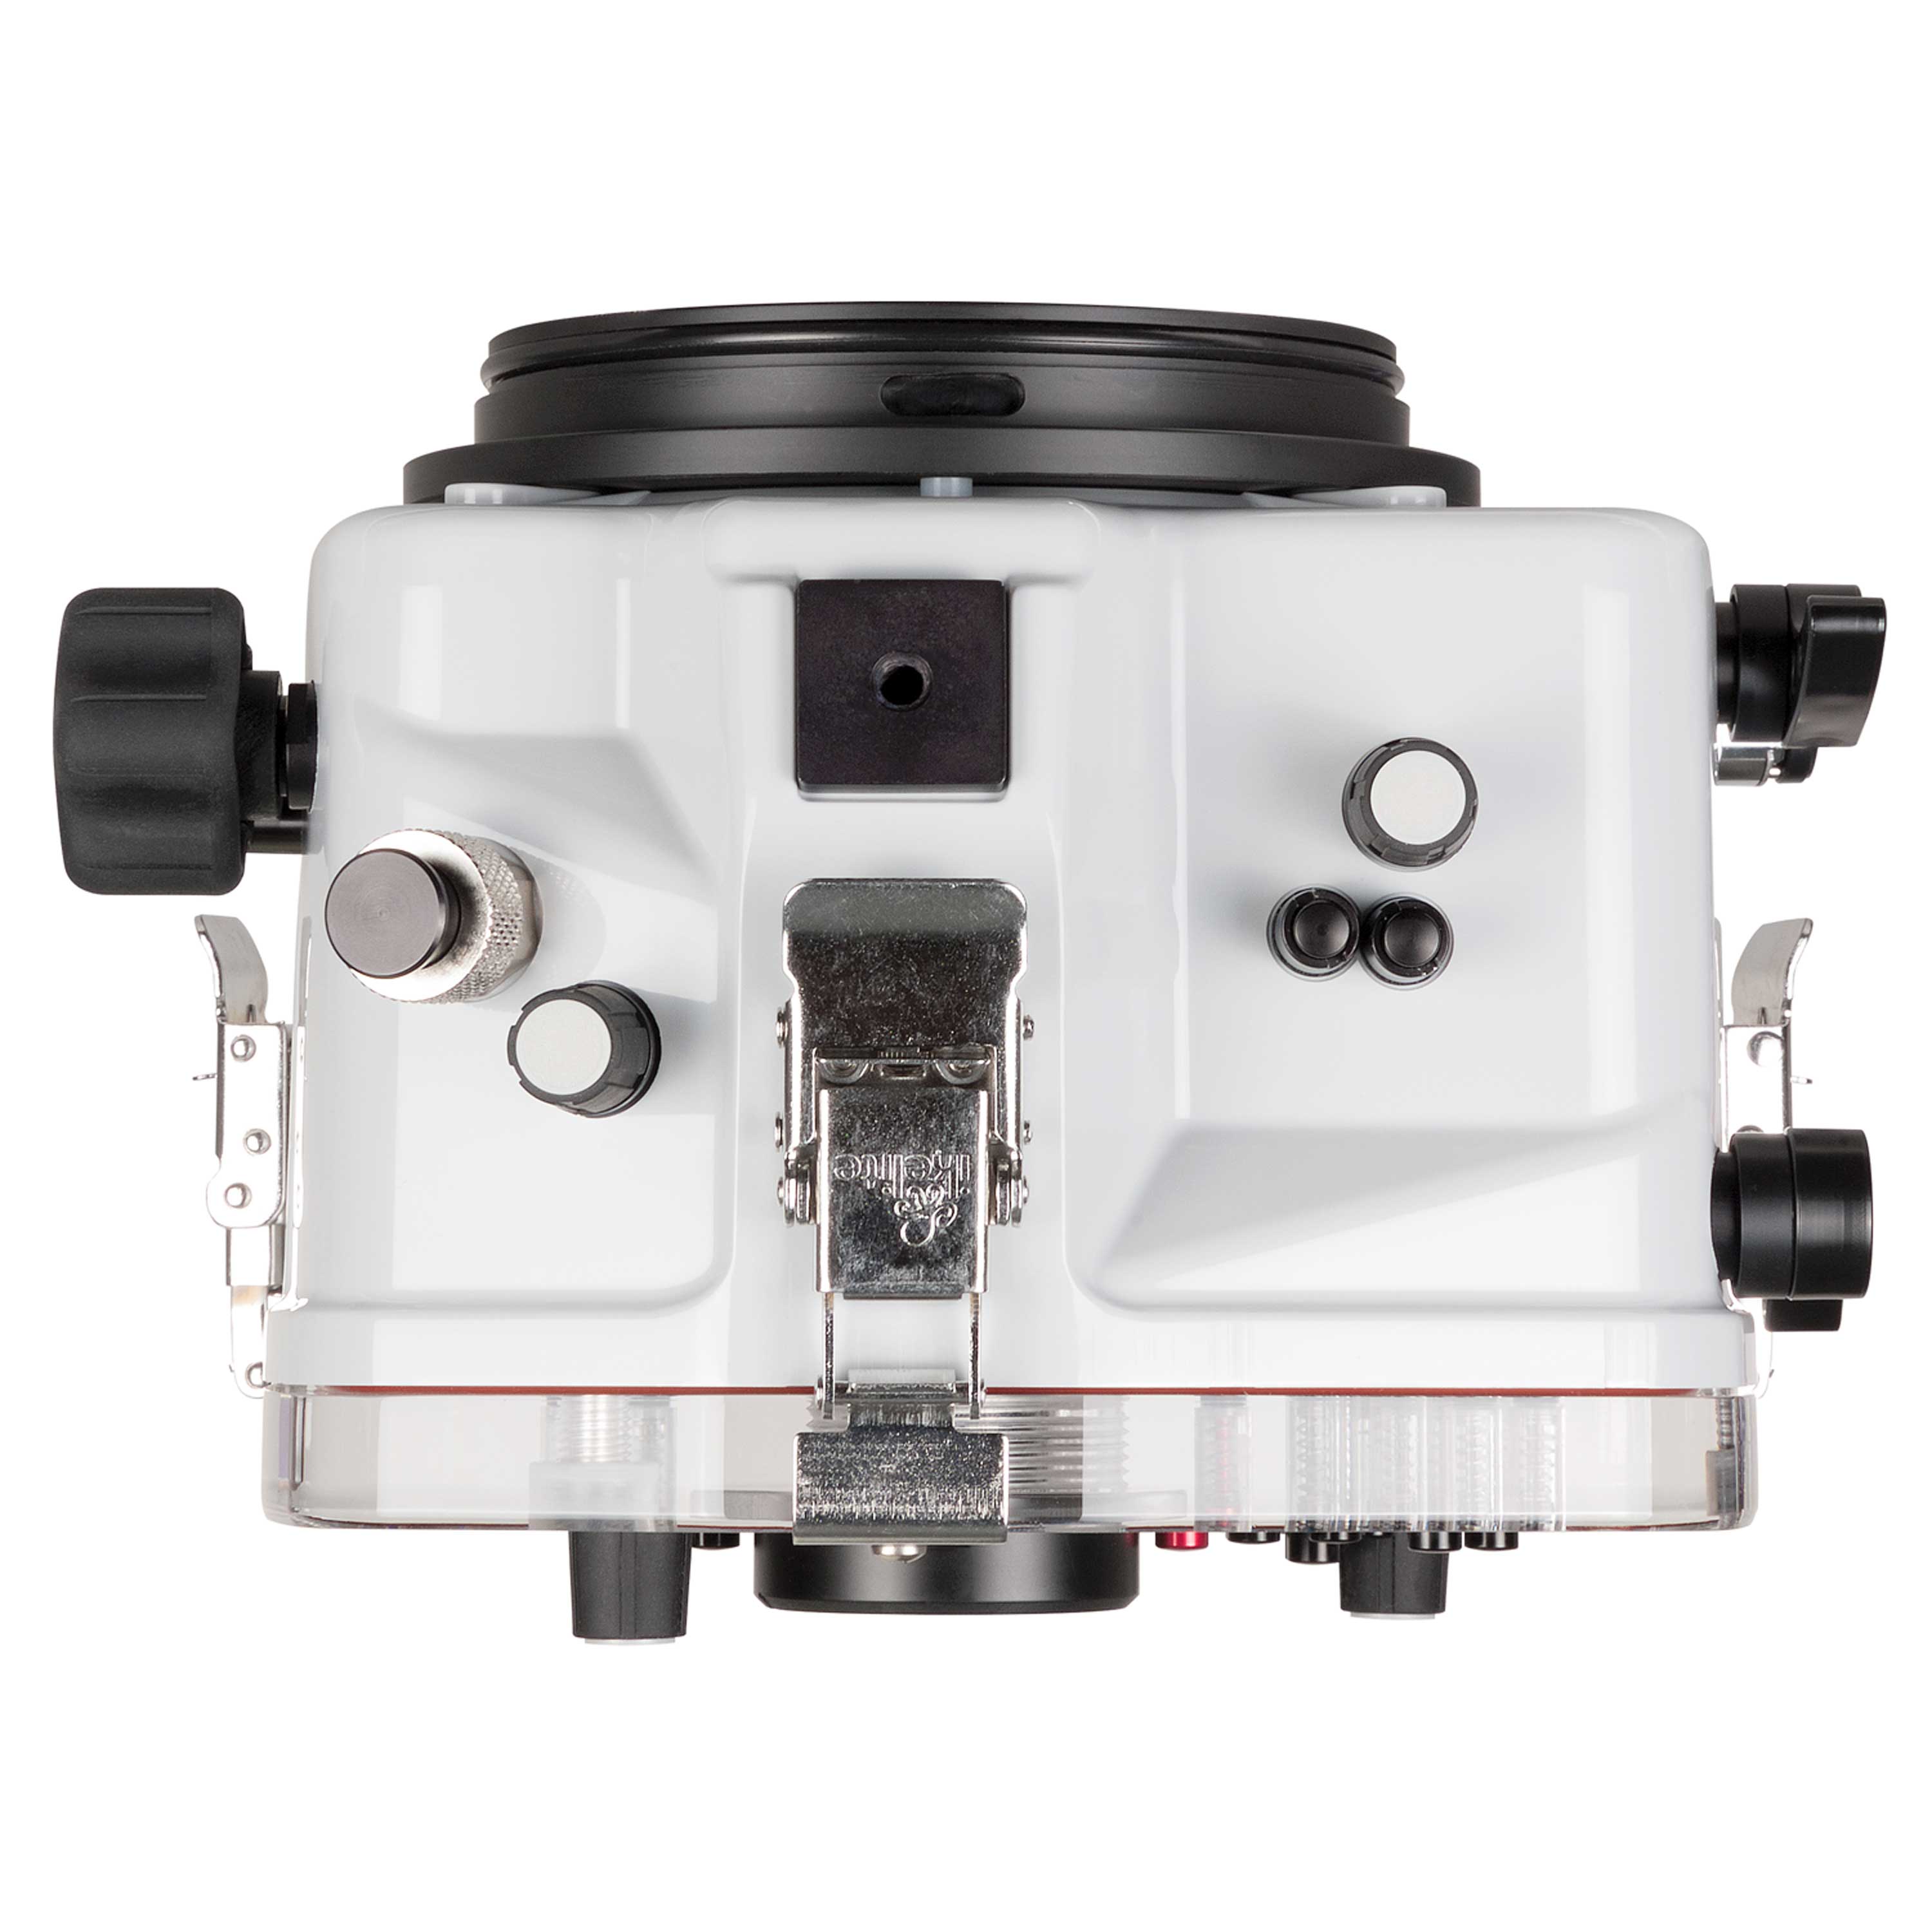 200DL Underwater Housing for Canon EOS 77D, EOS 9000D DSLR Cameras